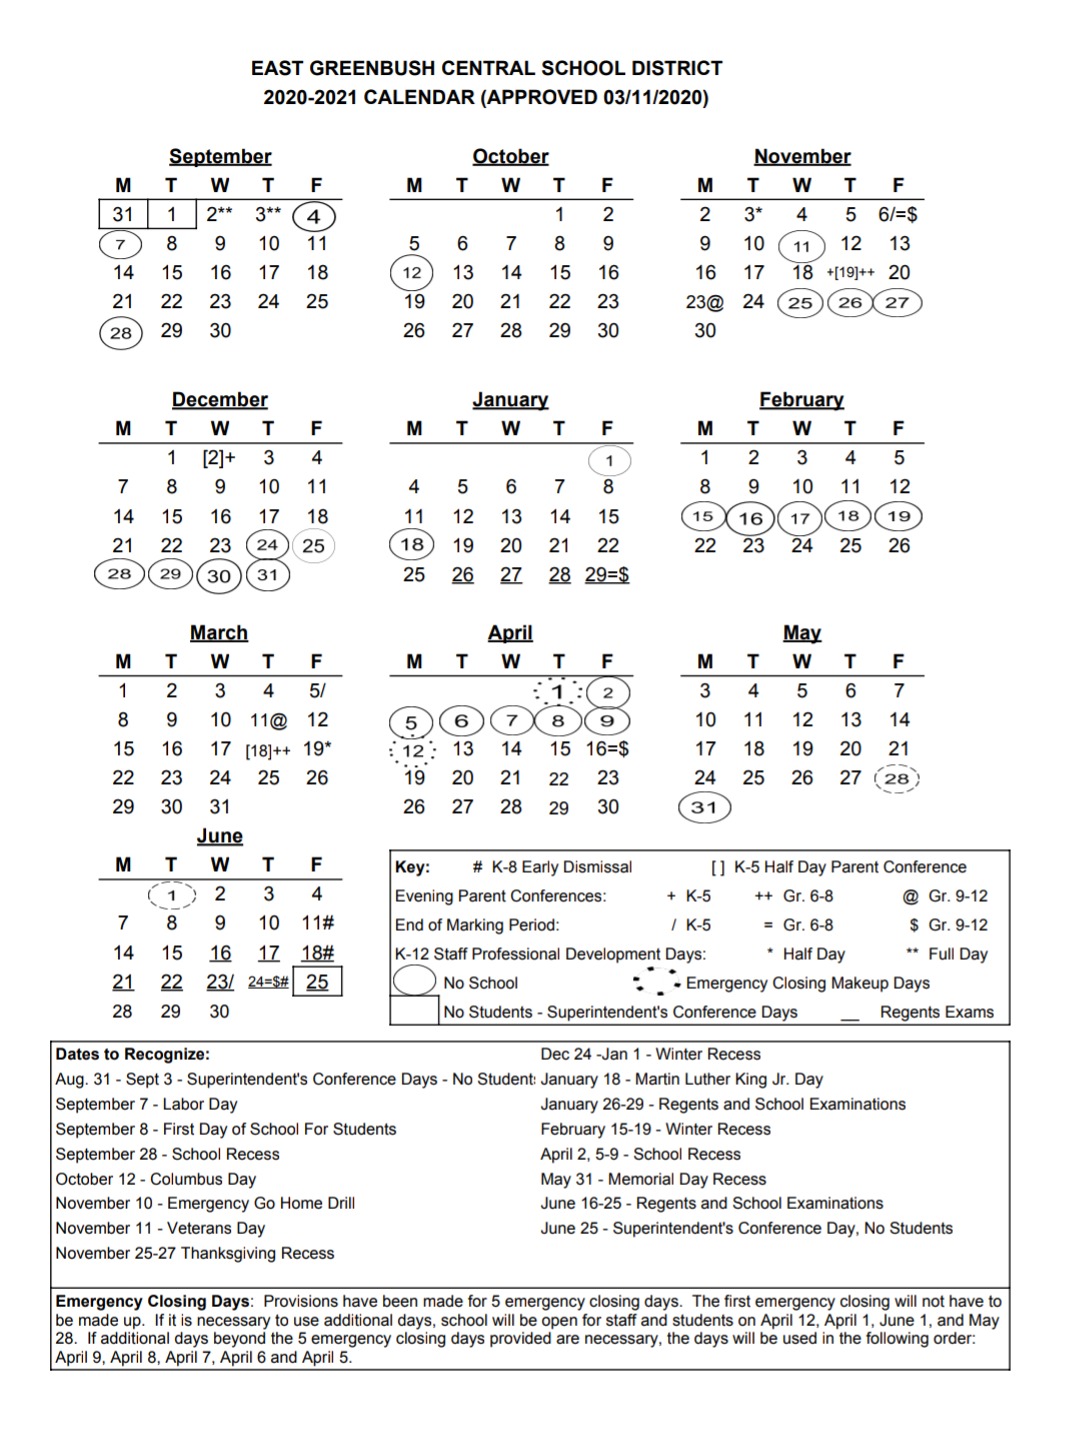 2020-21 District Calendar at a Glance